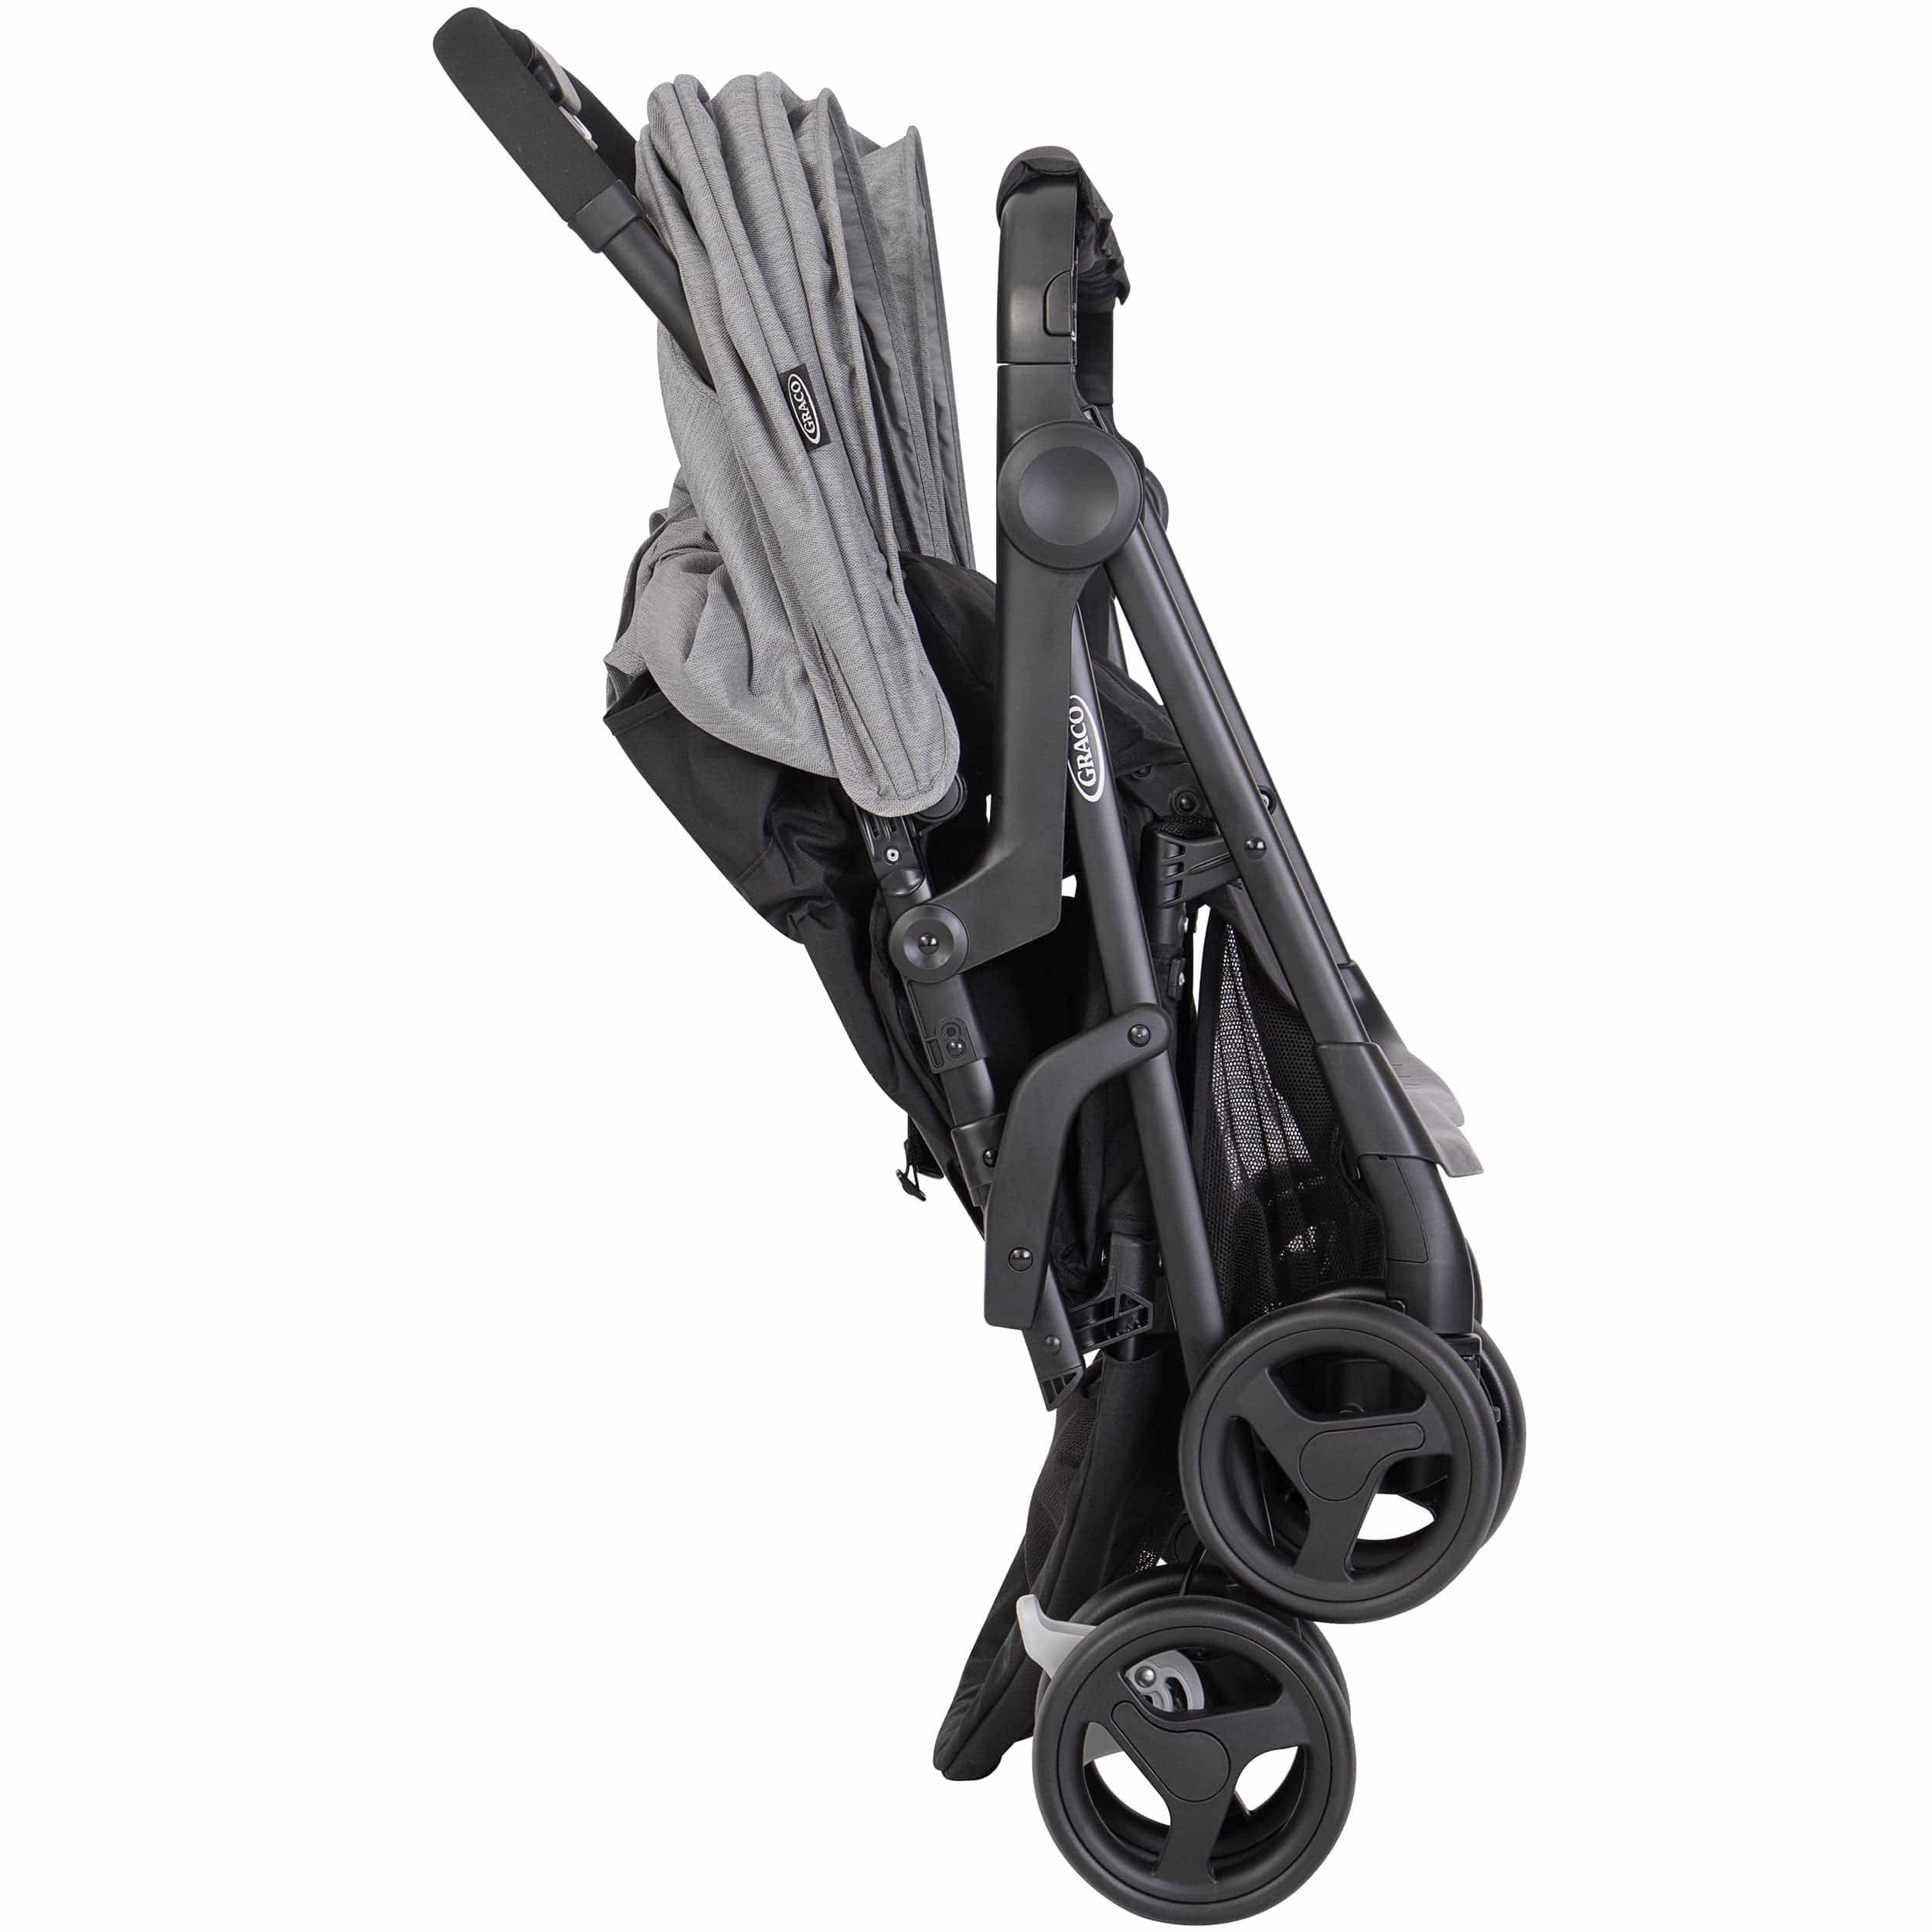 Graco baby pushchairs Graco Duo Rider Stroller in Steeple Grey GS1217AASTG000